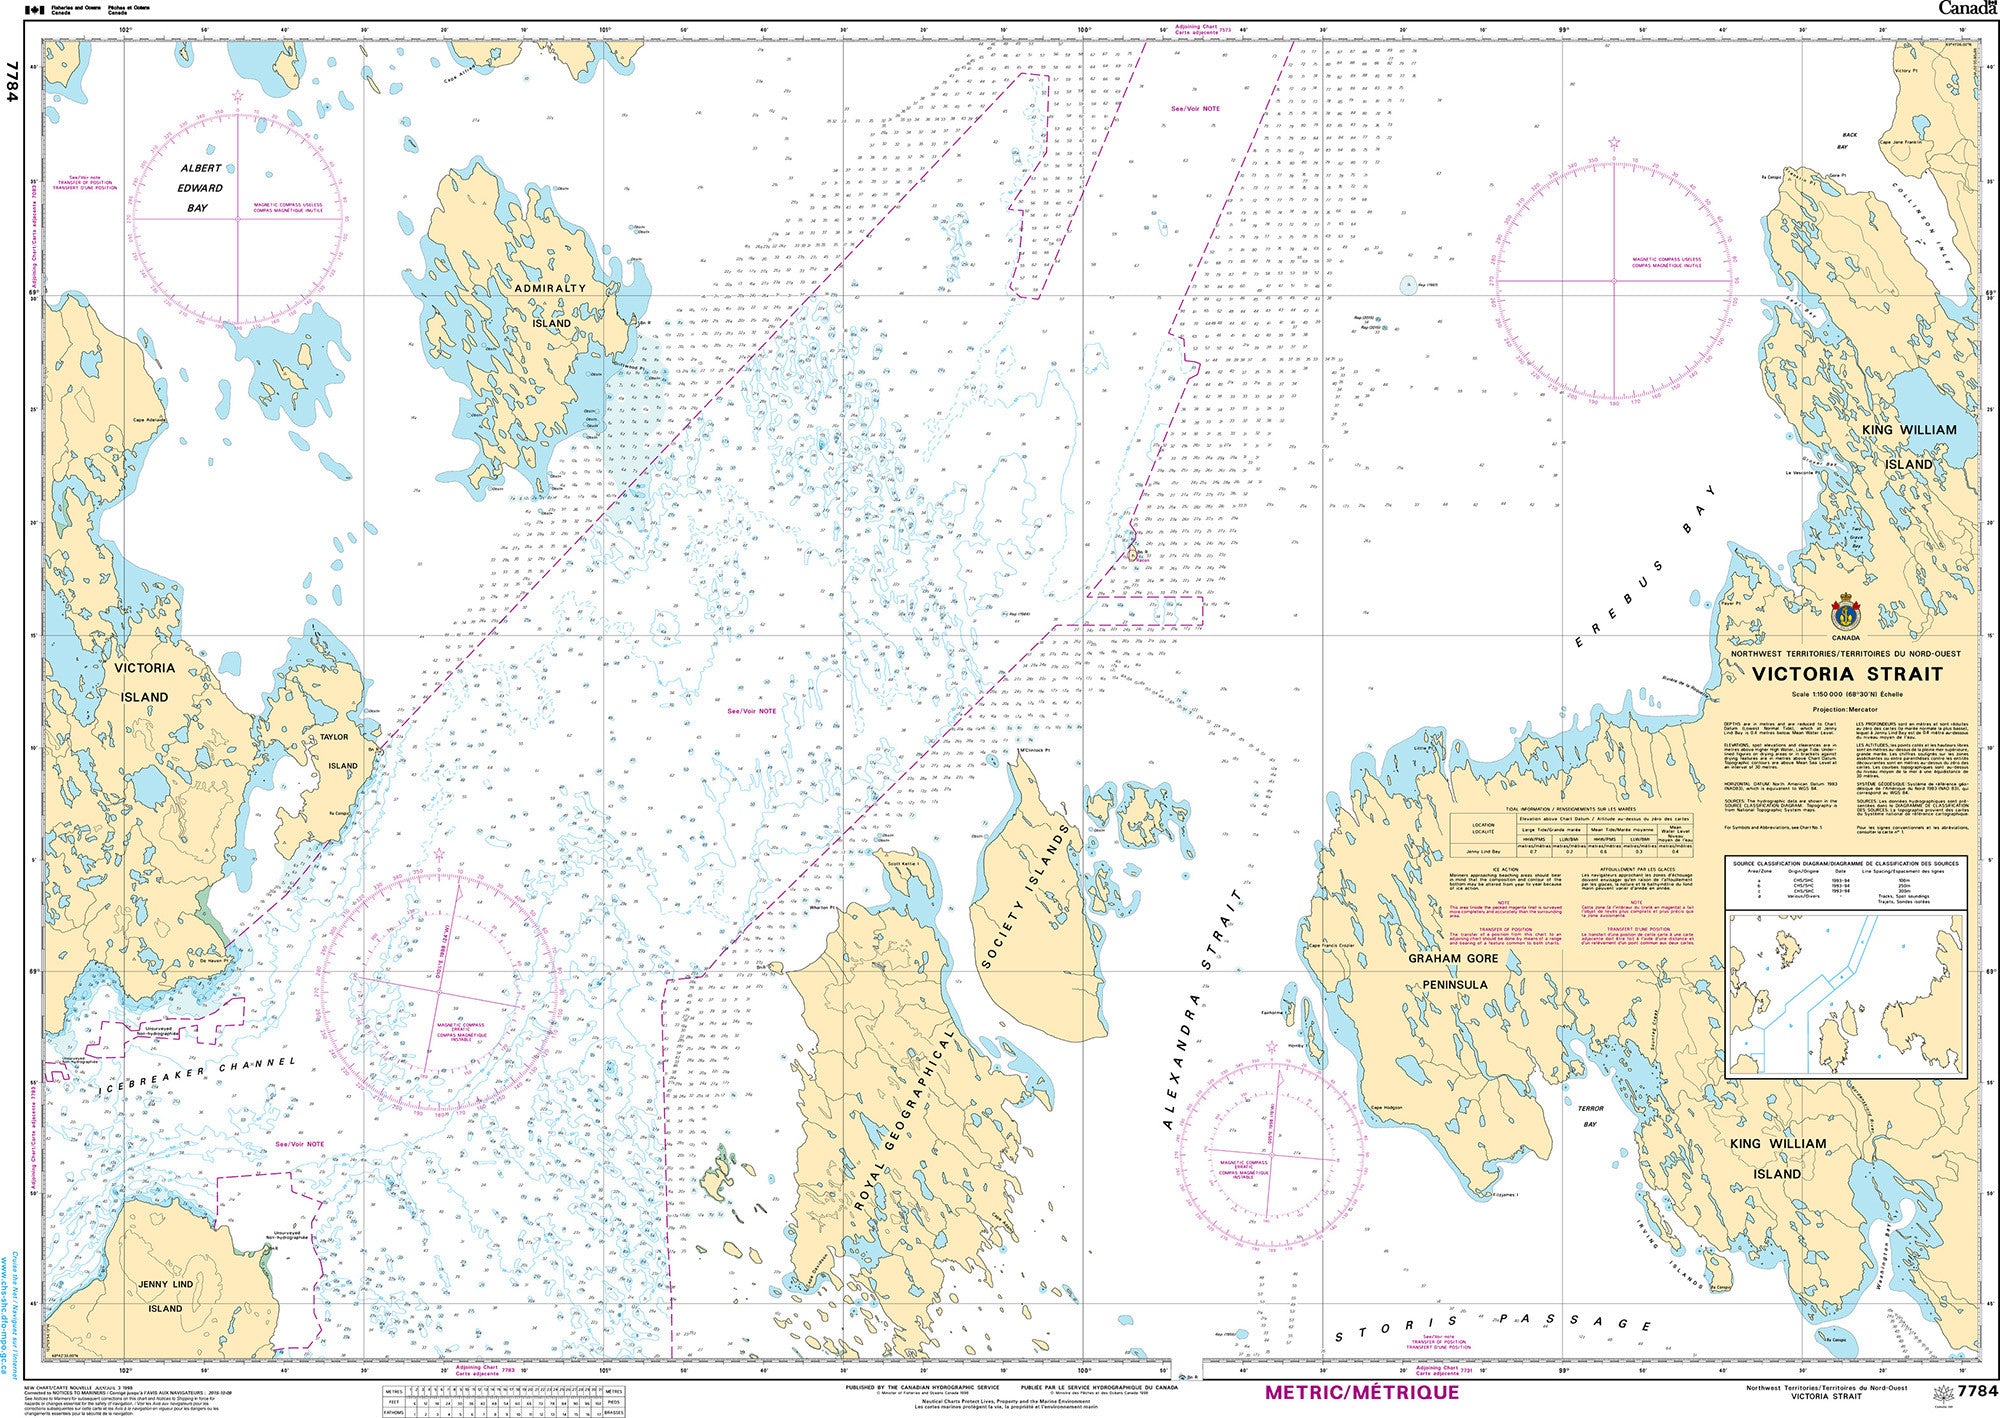 Canadian Hydrographic Service Nautical Chart CHS7784: Victoria Strait